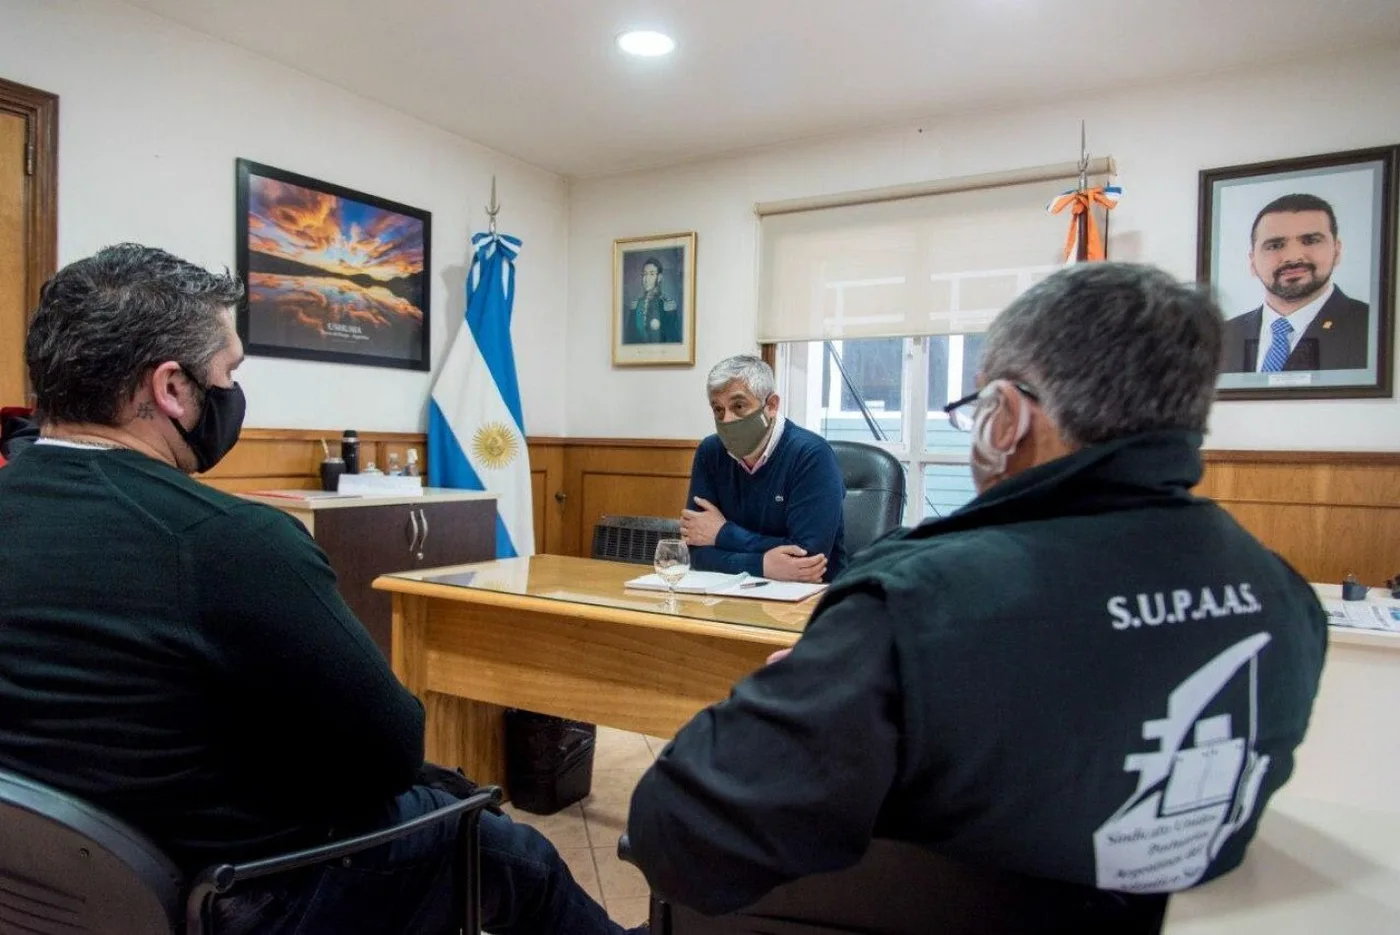 Municipio de Ushuaia se reunió con referentes del (SUPAAS)